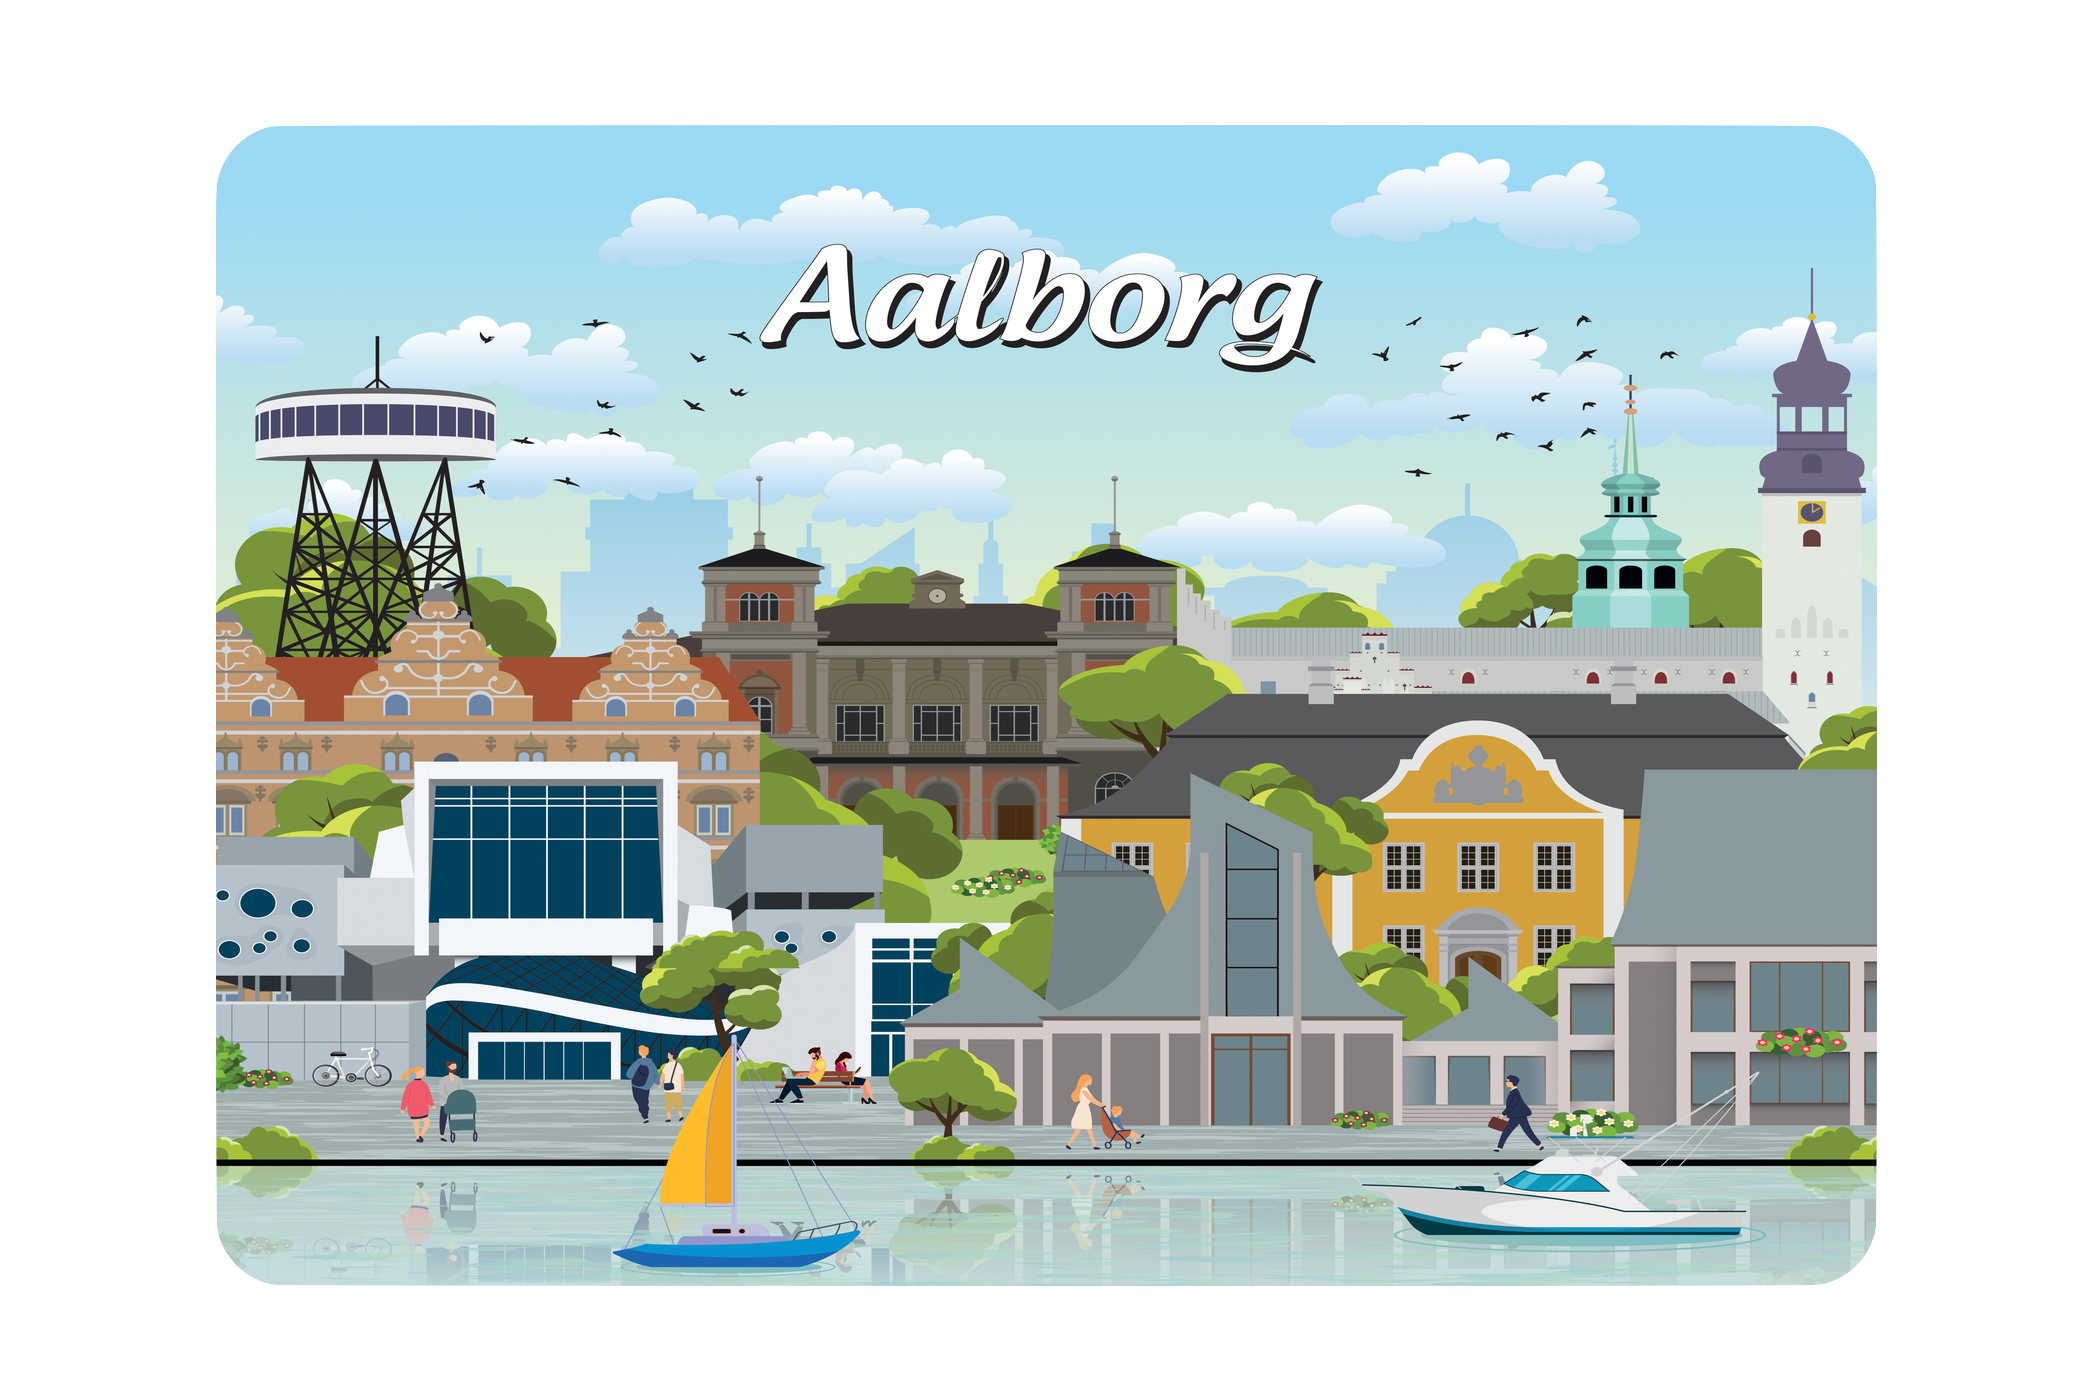 Aalborg - Bykoncept